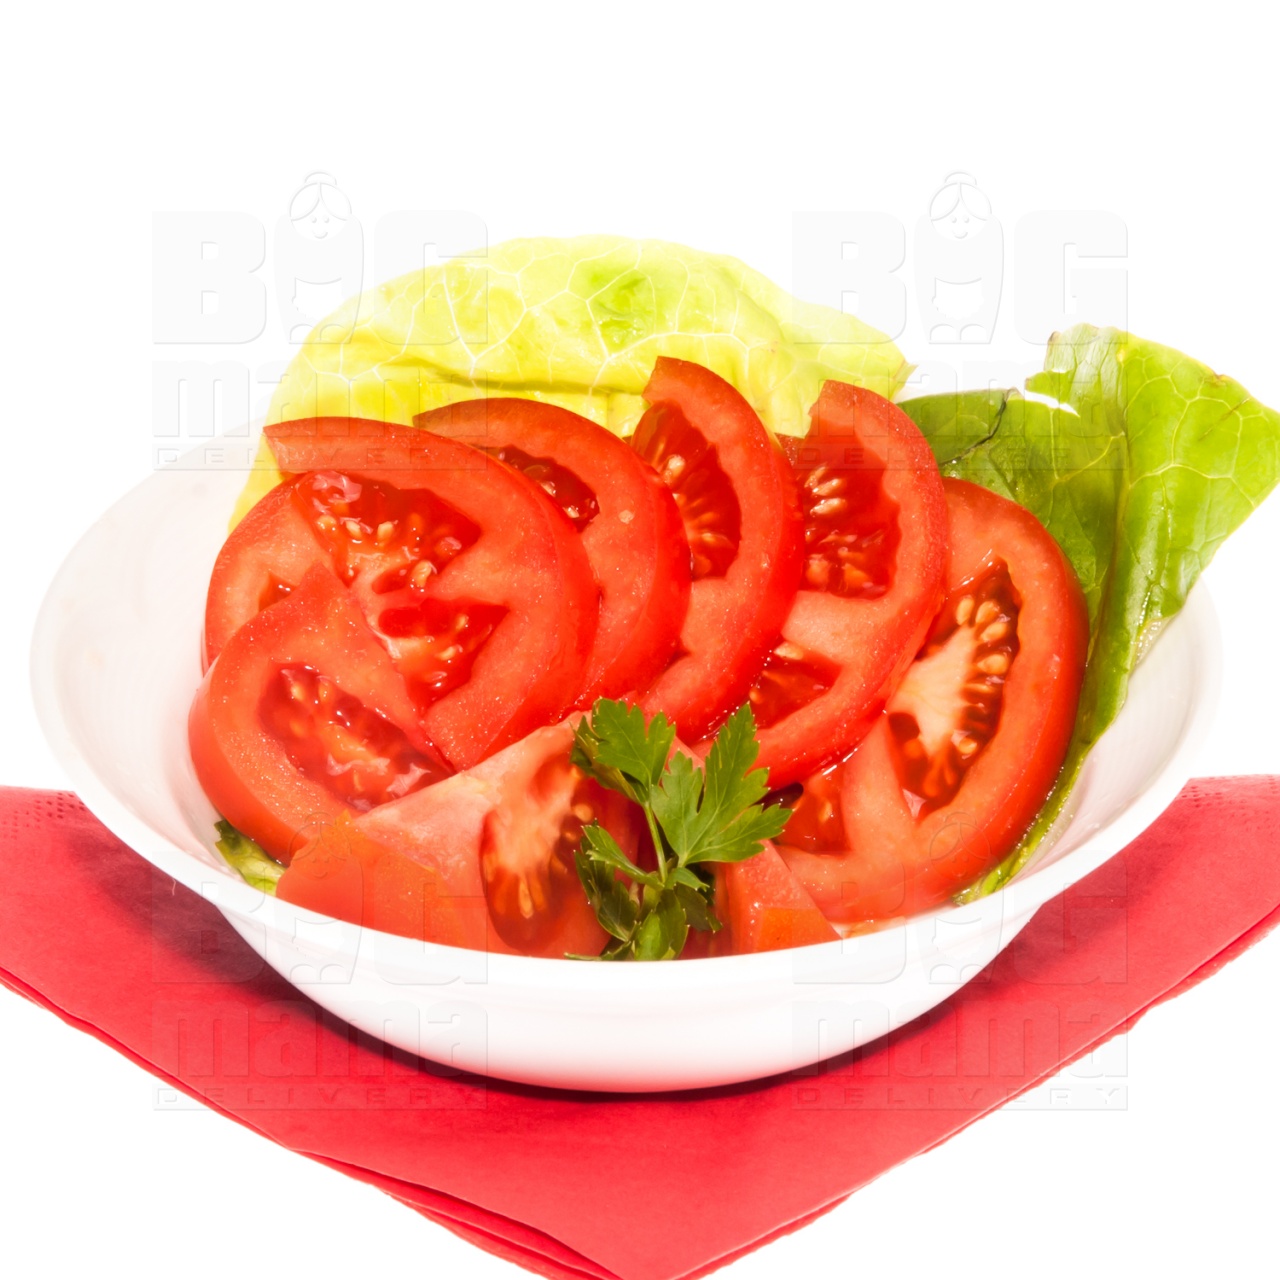 Product #149 image - Tomato salad